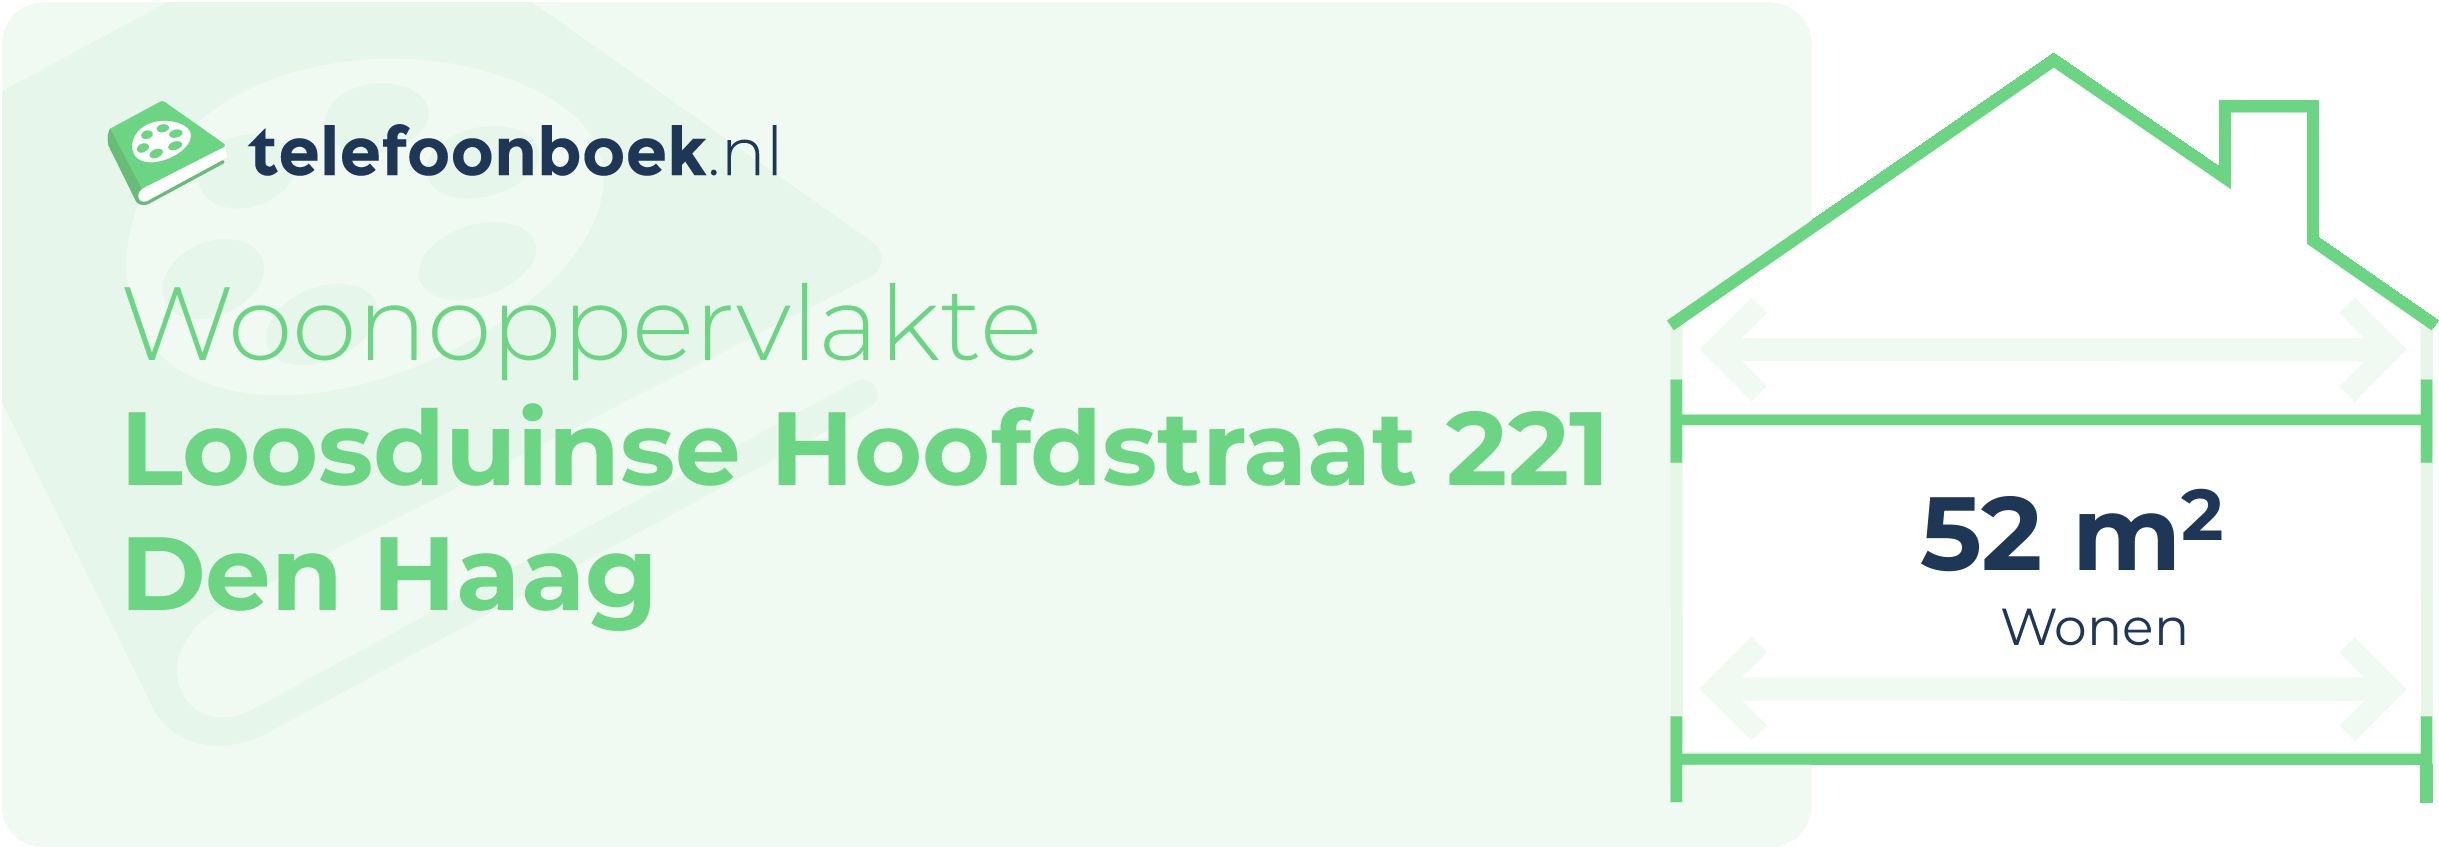 Woonoppervlakte Loosduinse Hoofdstraat 221 Den Haag